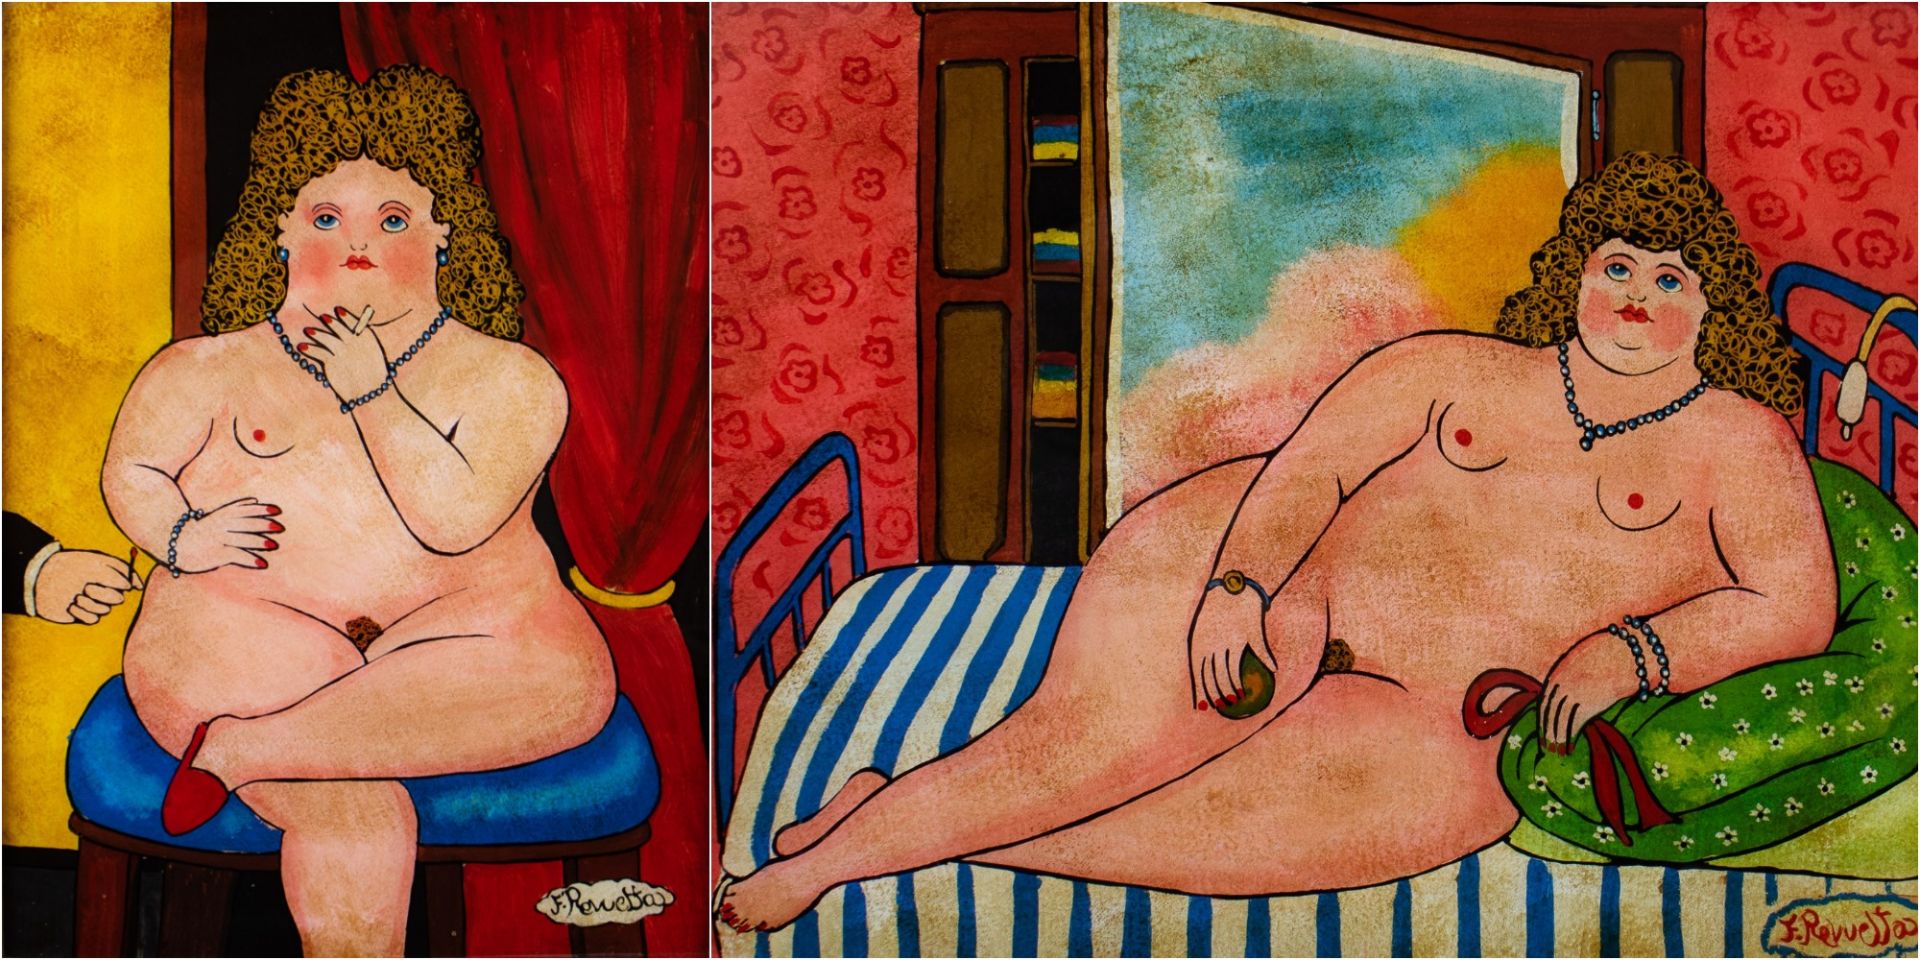 2 eglomisé paintings style Botero, signed F Revueltas